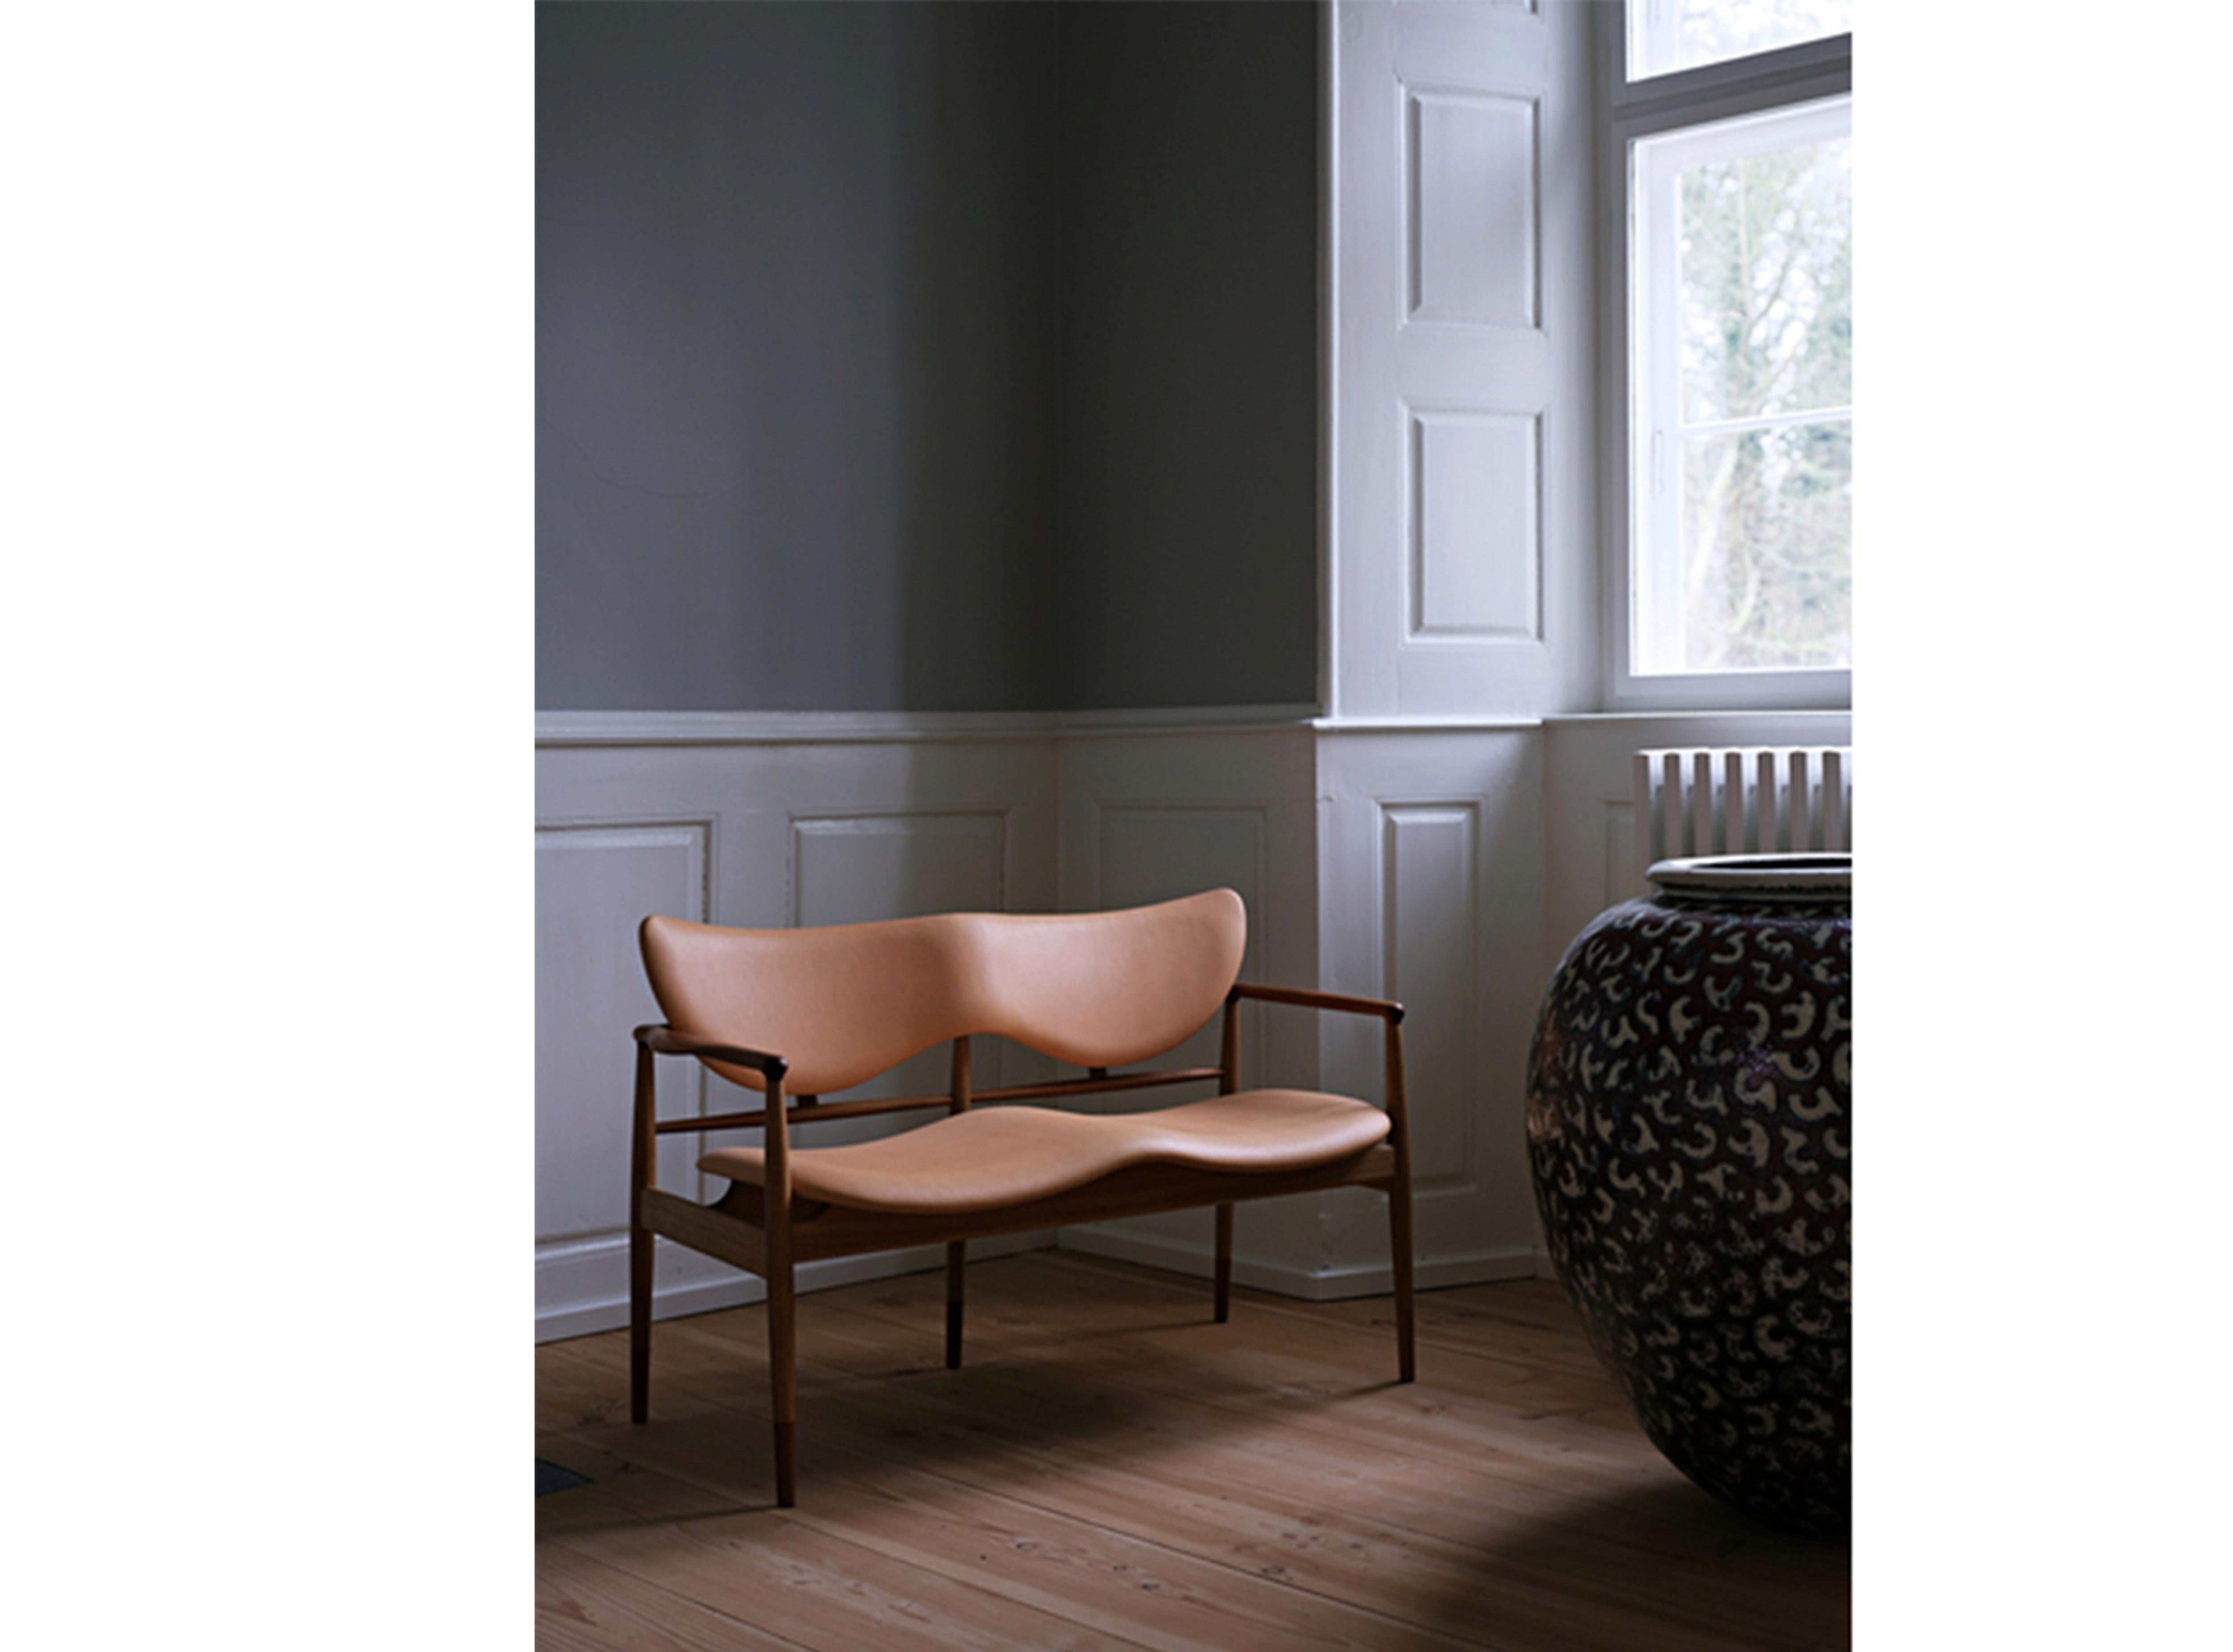 Finn Juhl 48 Sofa Bench Wood and Leather Iconic Danish Modern Design 2